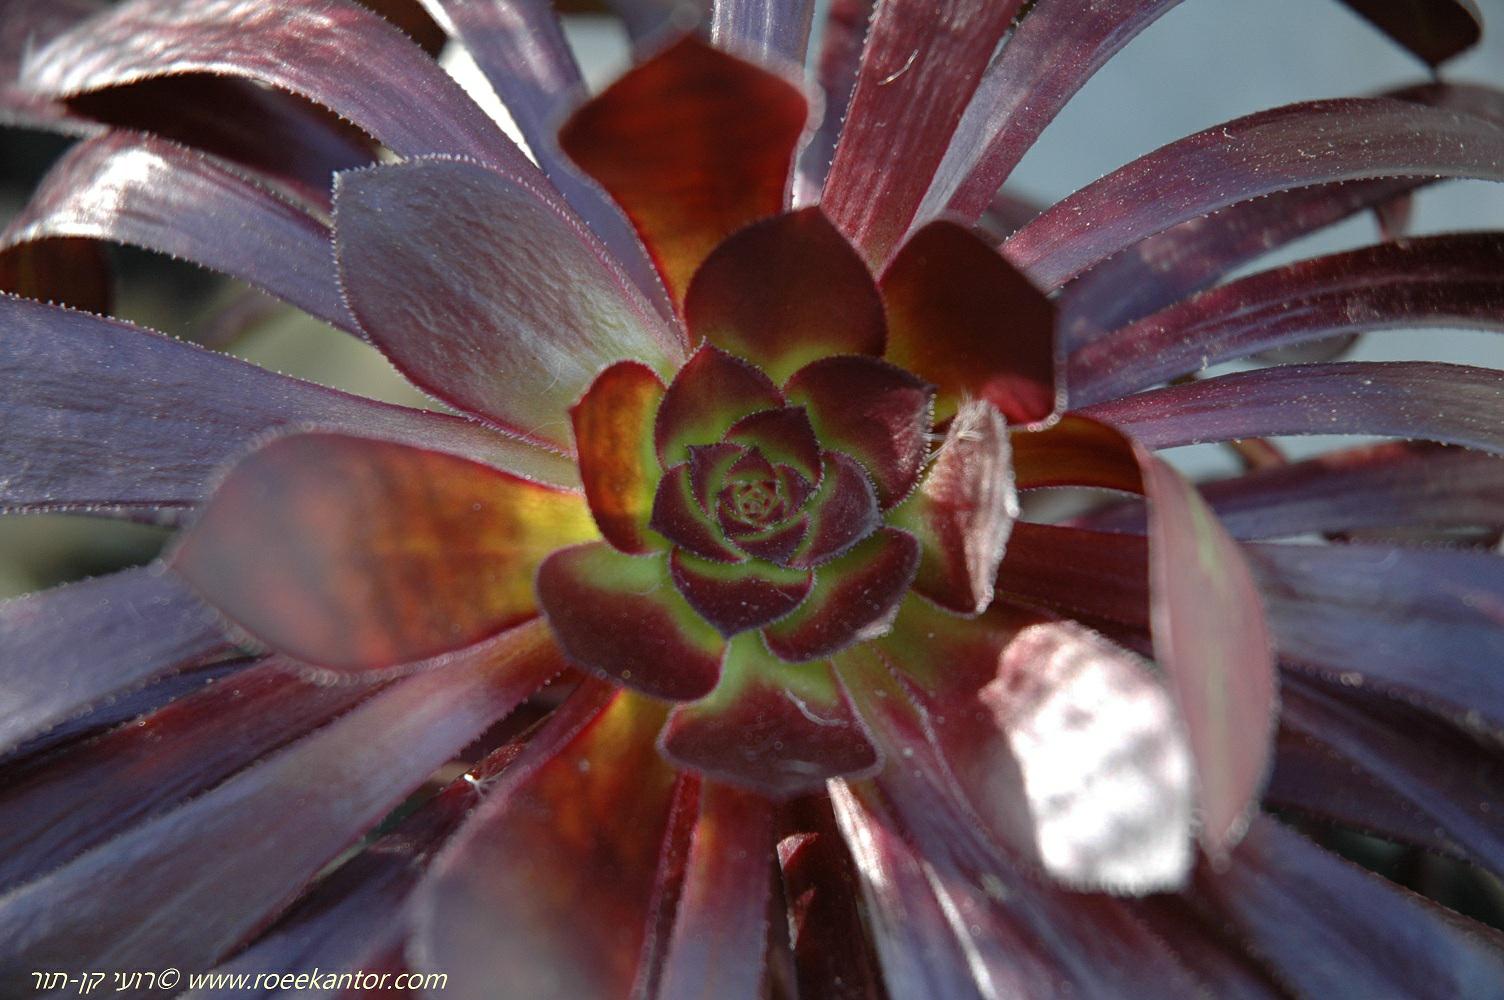 Aeonium arboreum 'Zwartkop' - Black Rose, נצחה שיחית 'שוורצקופ', נצחה שיחית 'שוורצקופ'